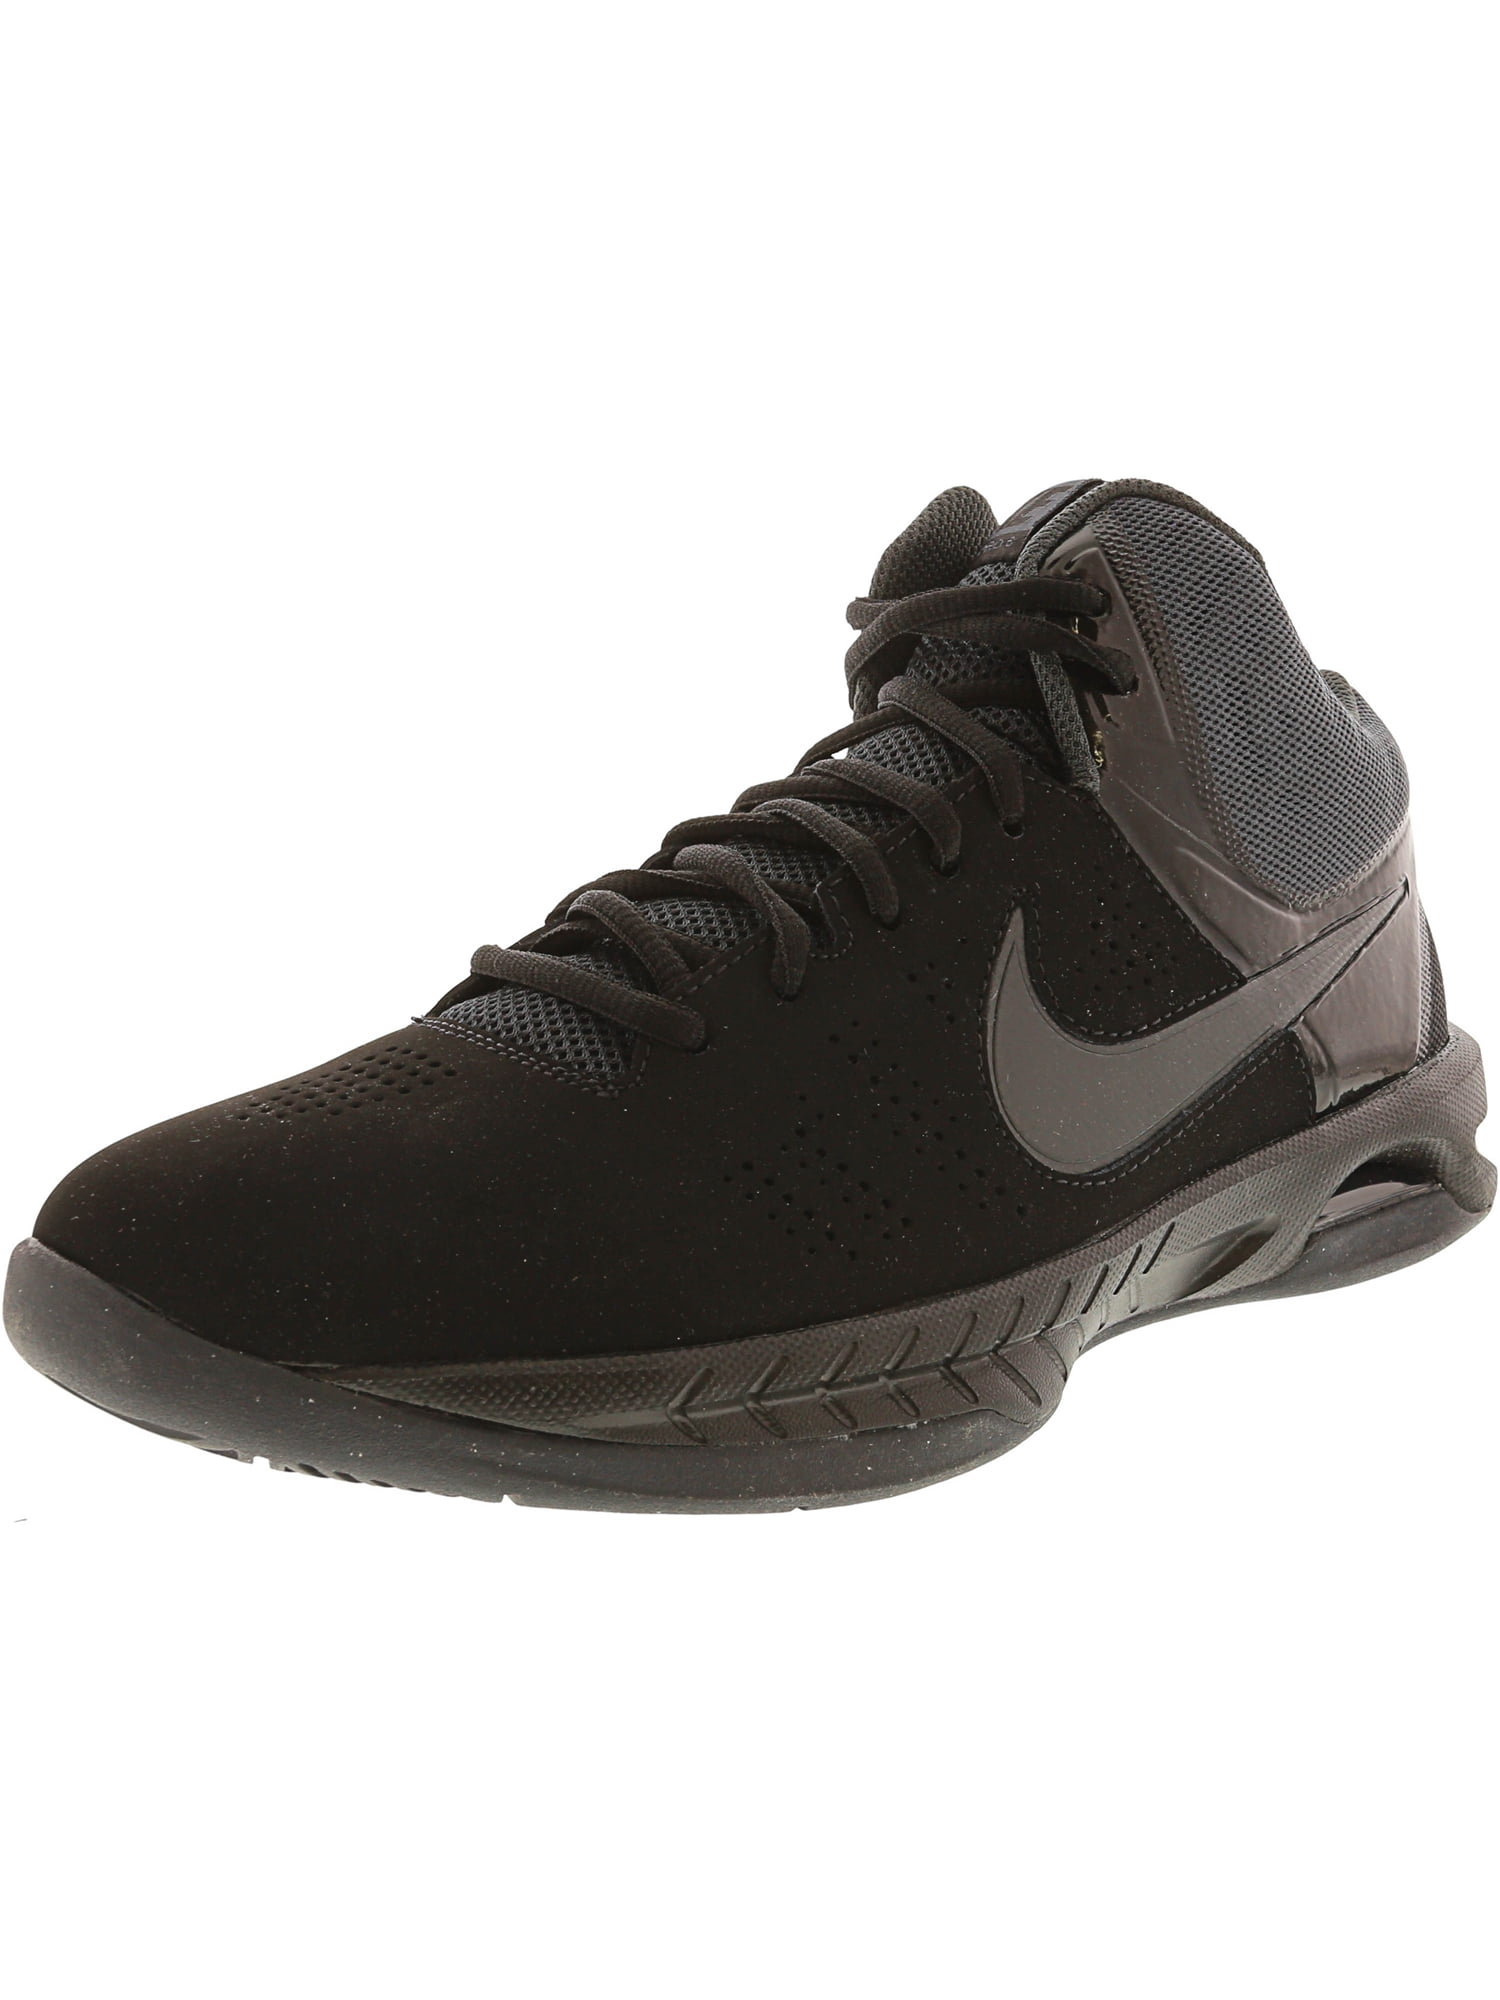 Nike Men's Air Visi Pro Vi Nbk Black/Anthracite Ankle-High Nubuck  Basketball Shoe - 10M